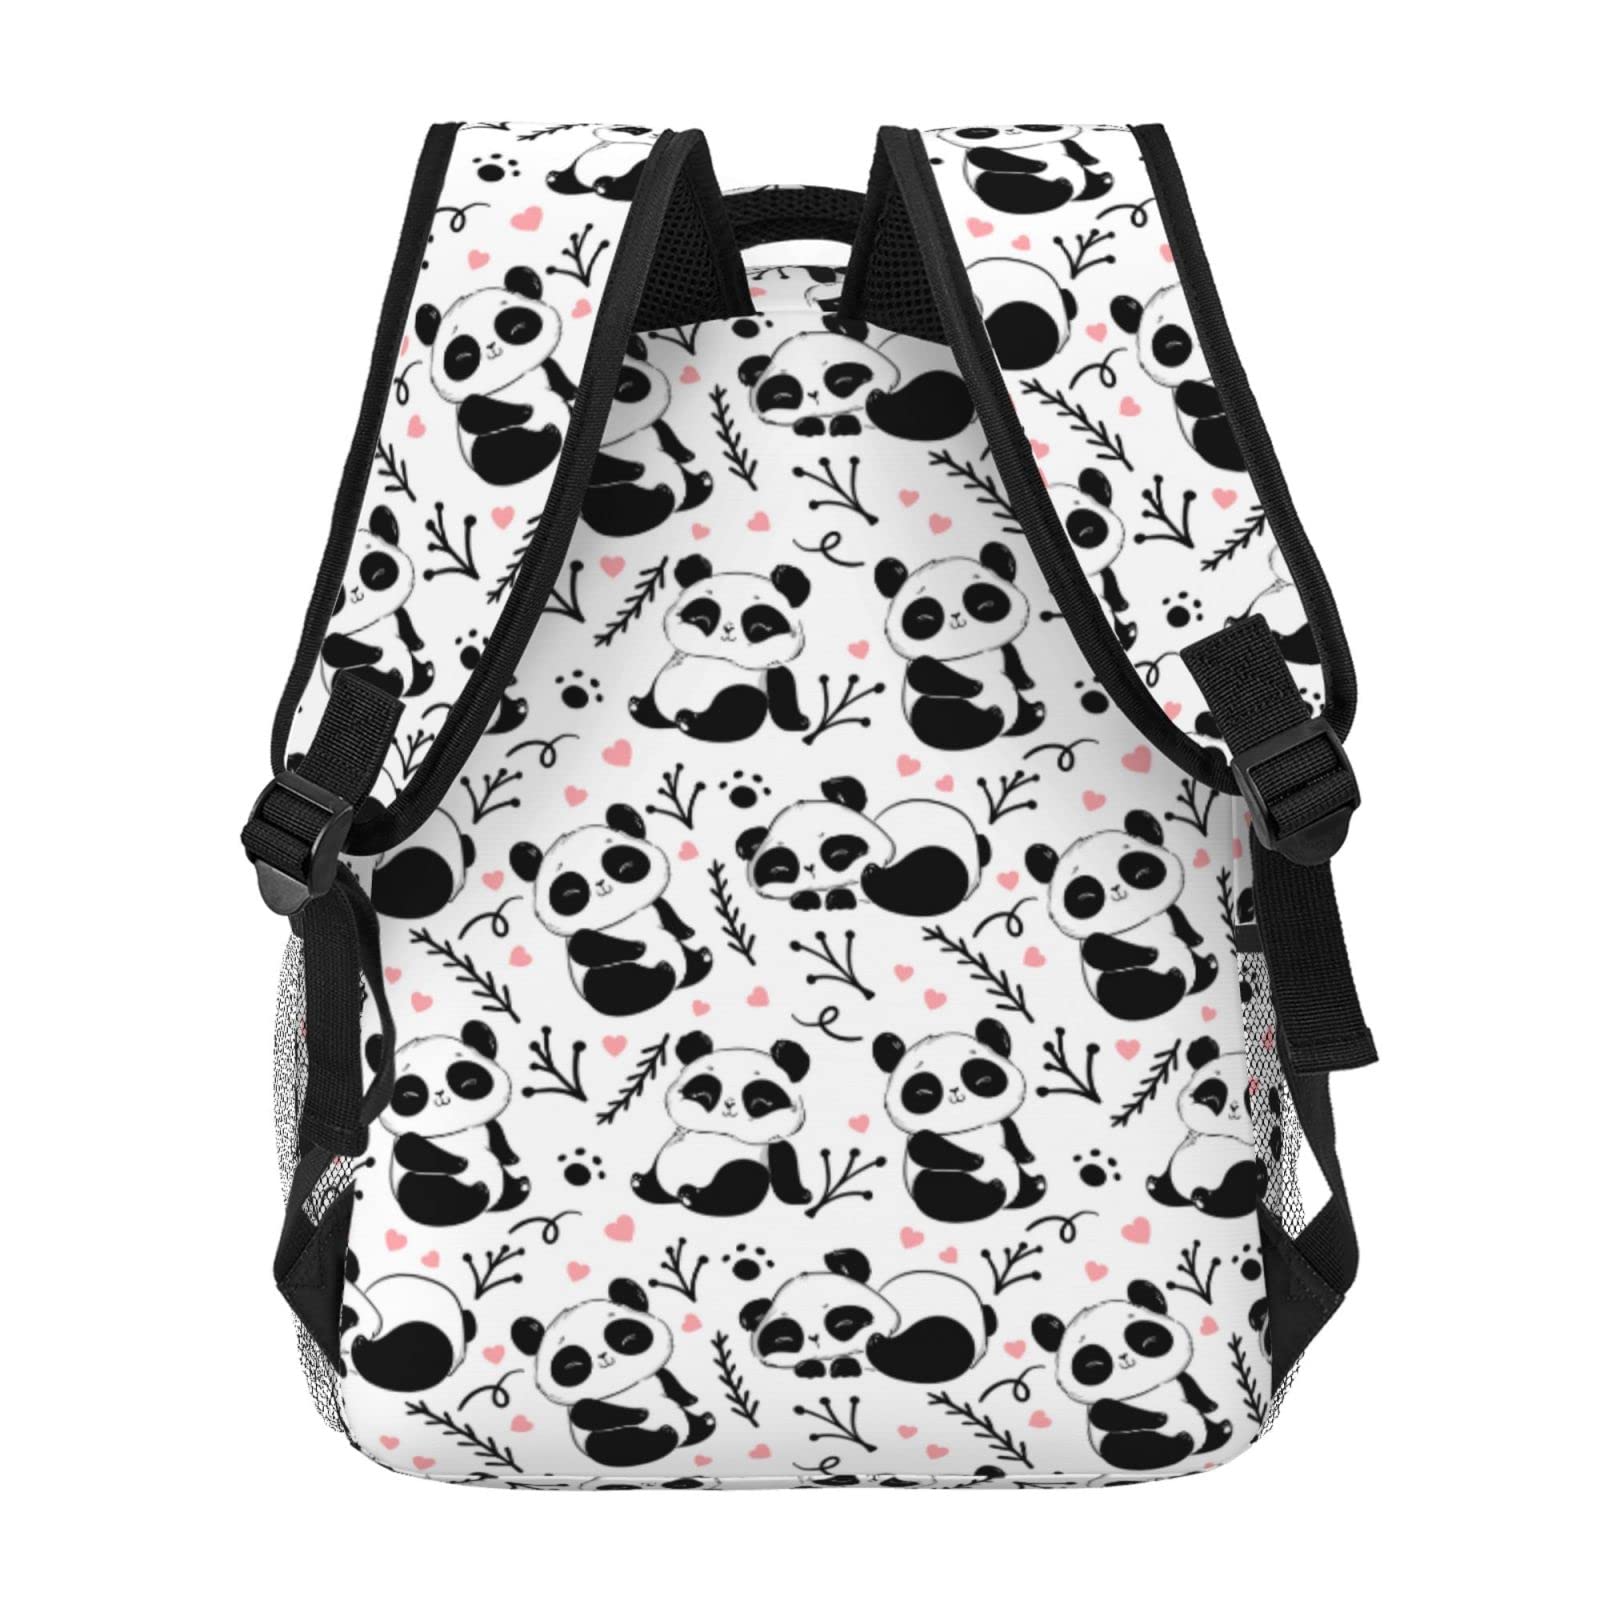 Niuyoif Cute Cartoon Panda Large Backpack For Men Women Personalized Laptop Tablet Travel Daypacks Shoulder Bag